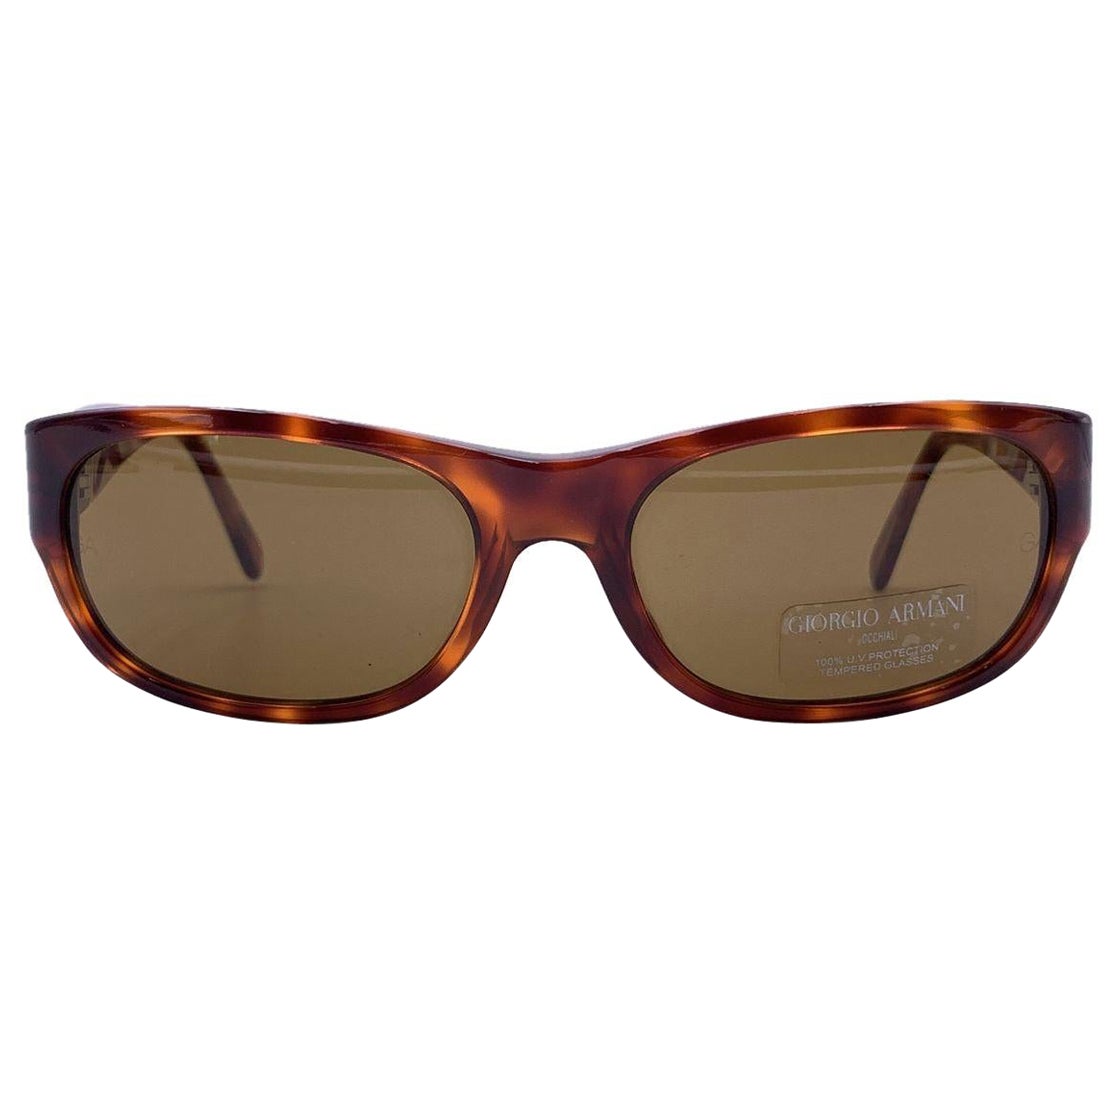 Giorgio Armani Vintage Brown Rectangle Sunglasses 845 050 140 mm For Sale